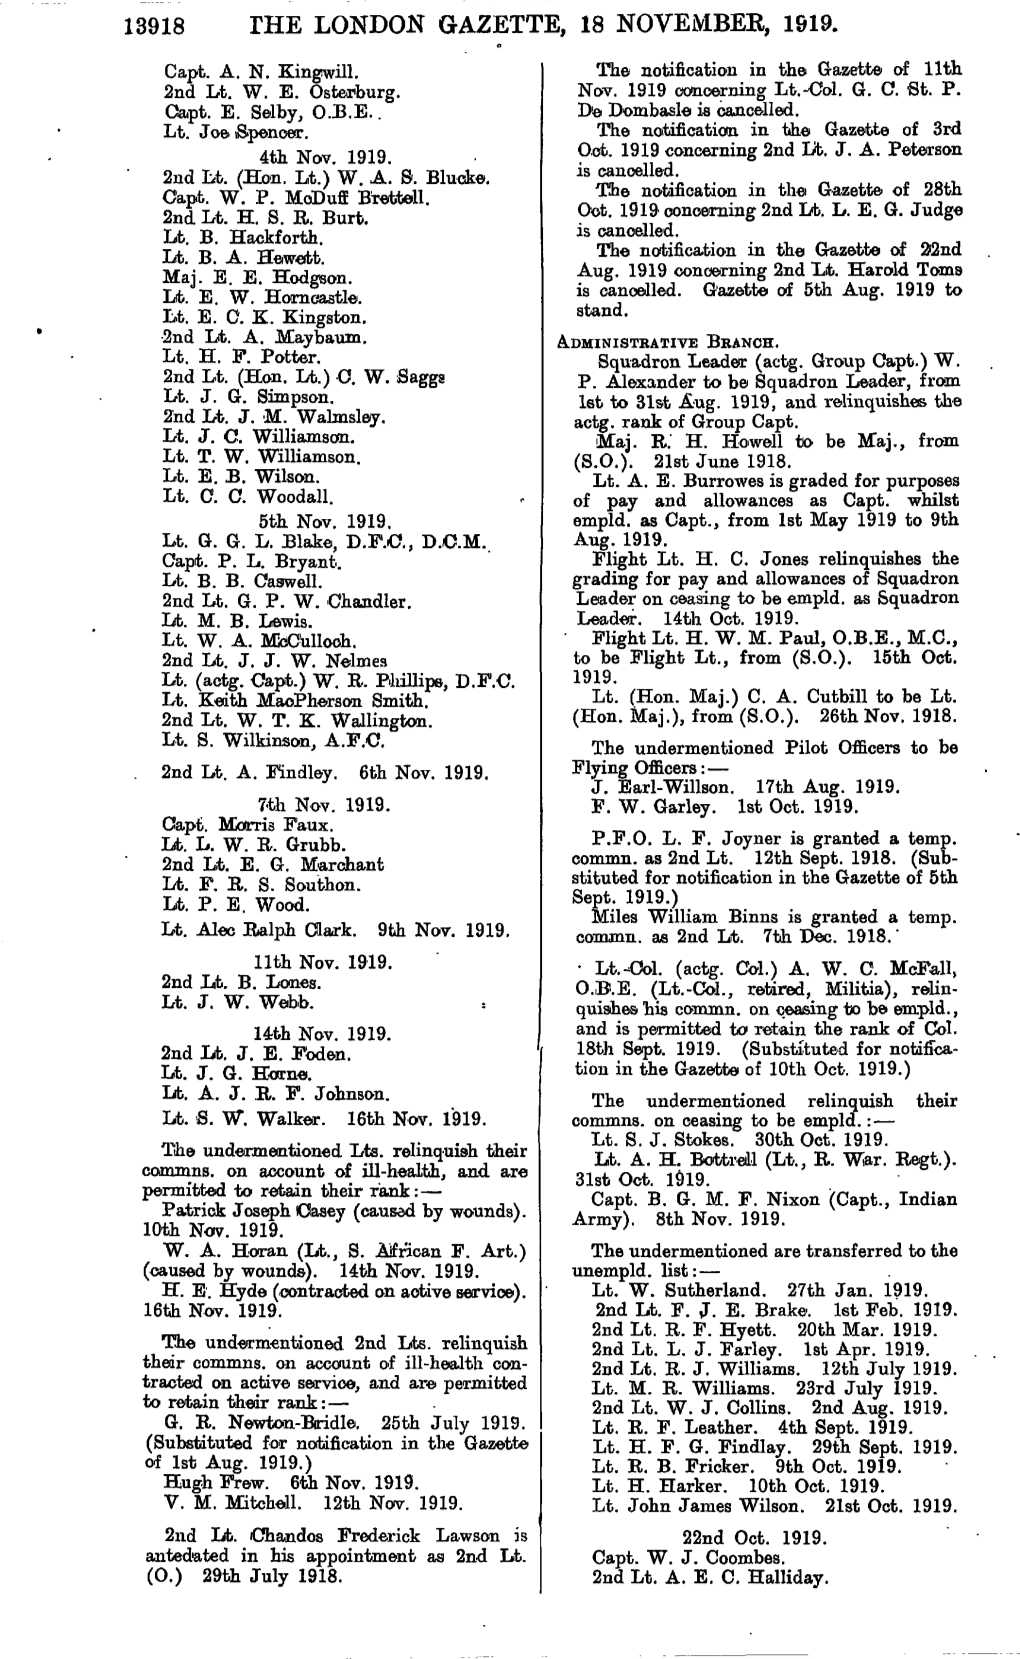 13918 the London Gazette, 18 November, 1919